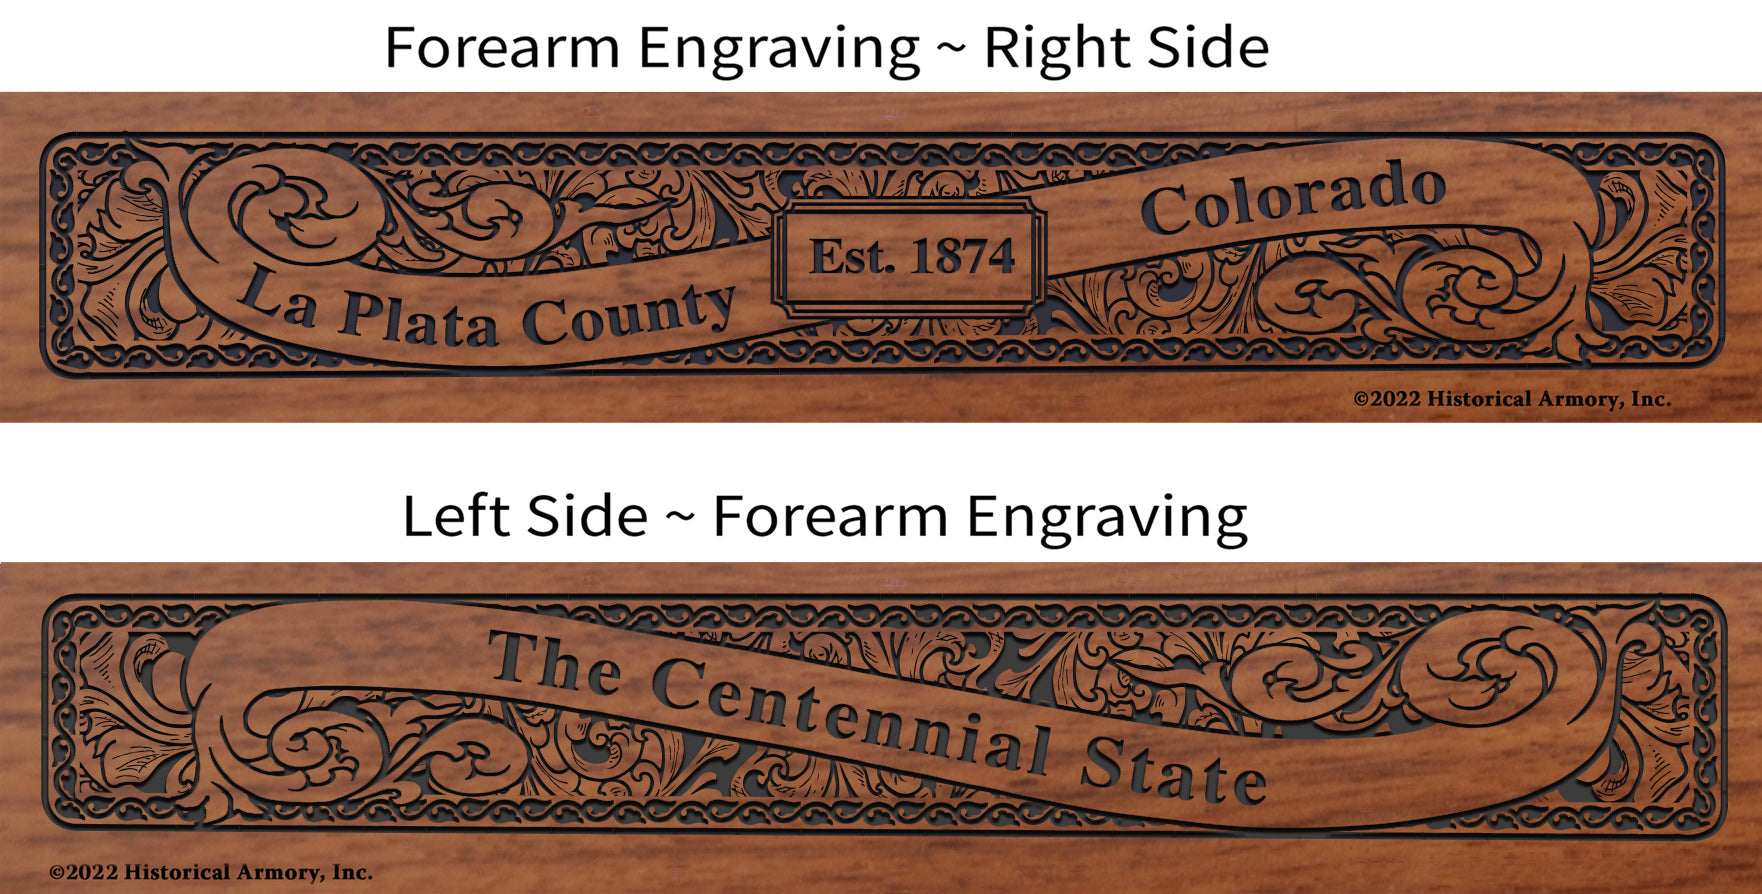 La Plata County Colorado Engraved Rifle Forearm